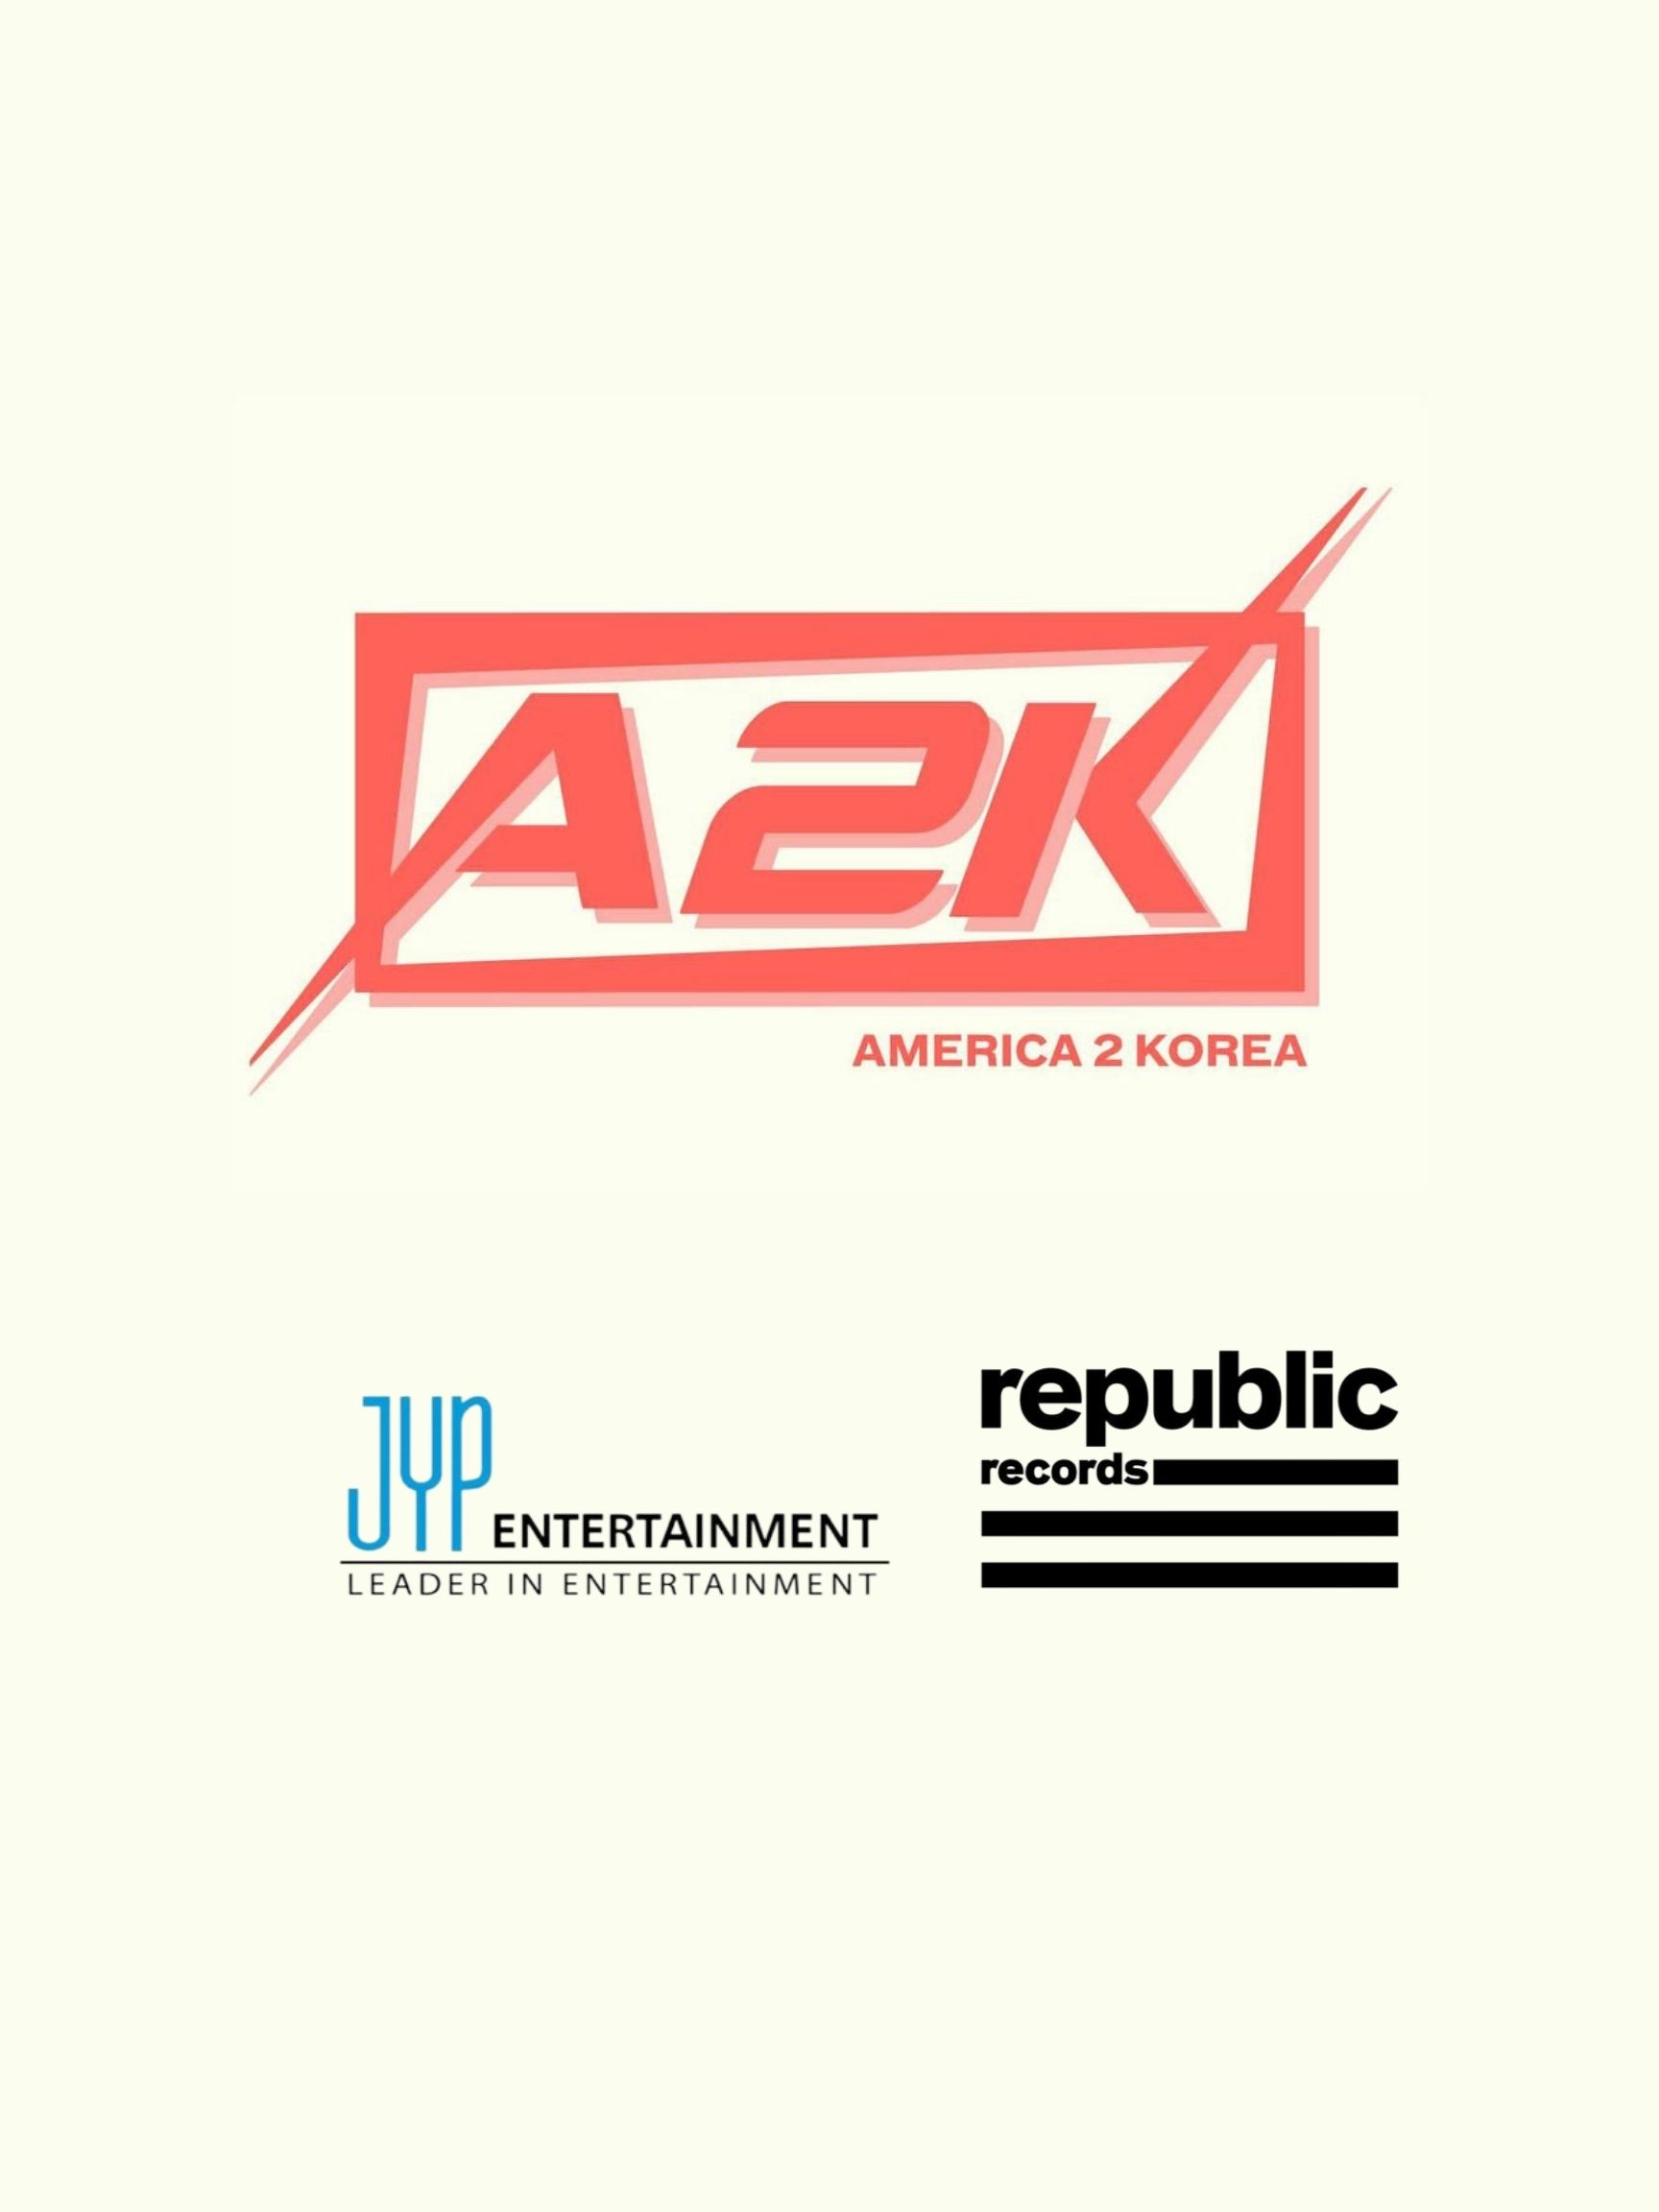 a2k_America2Korea